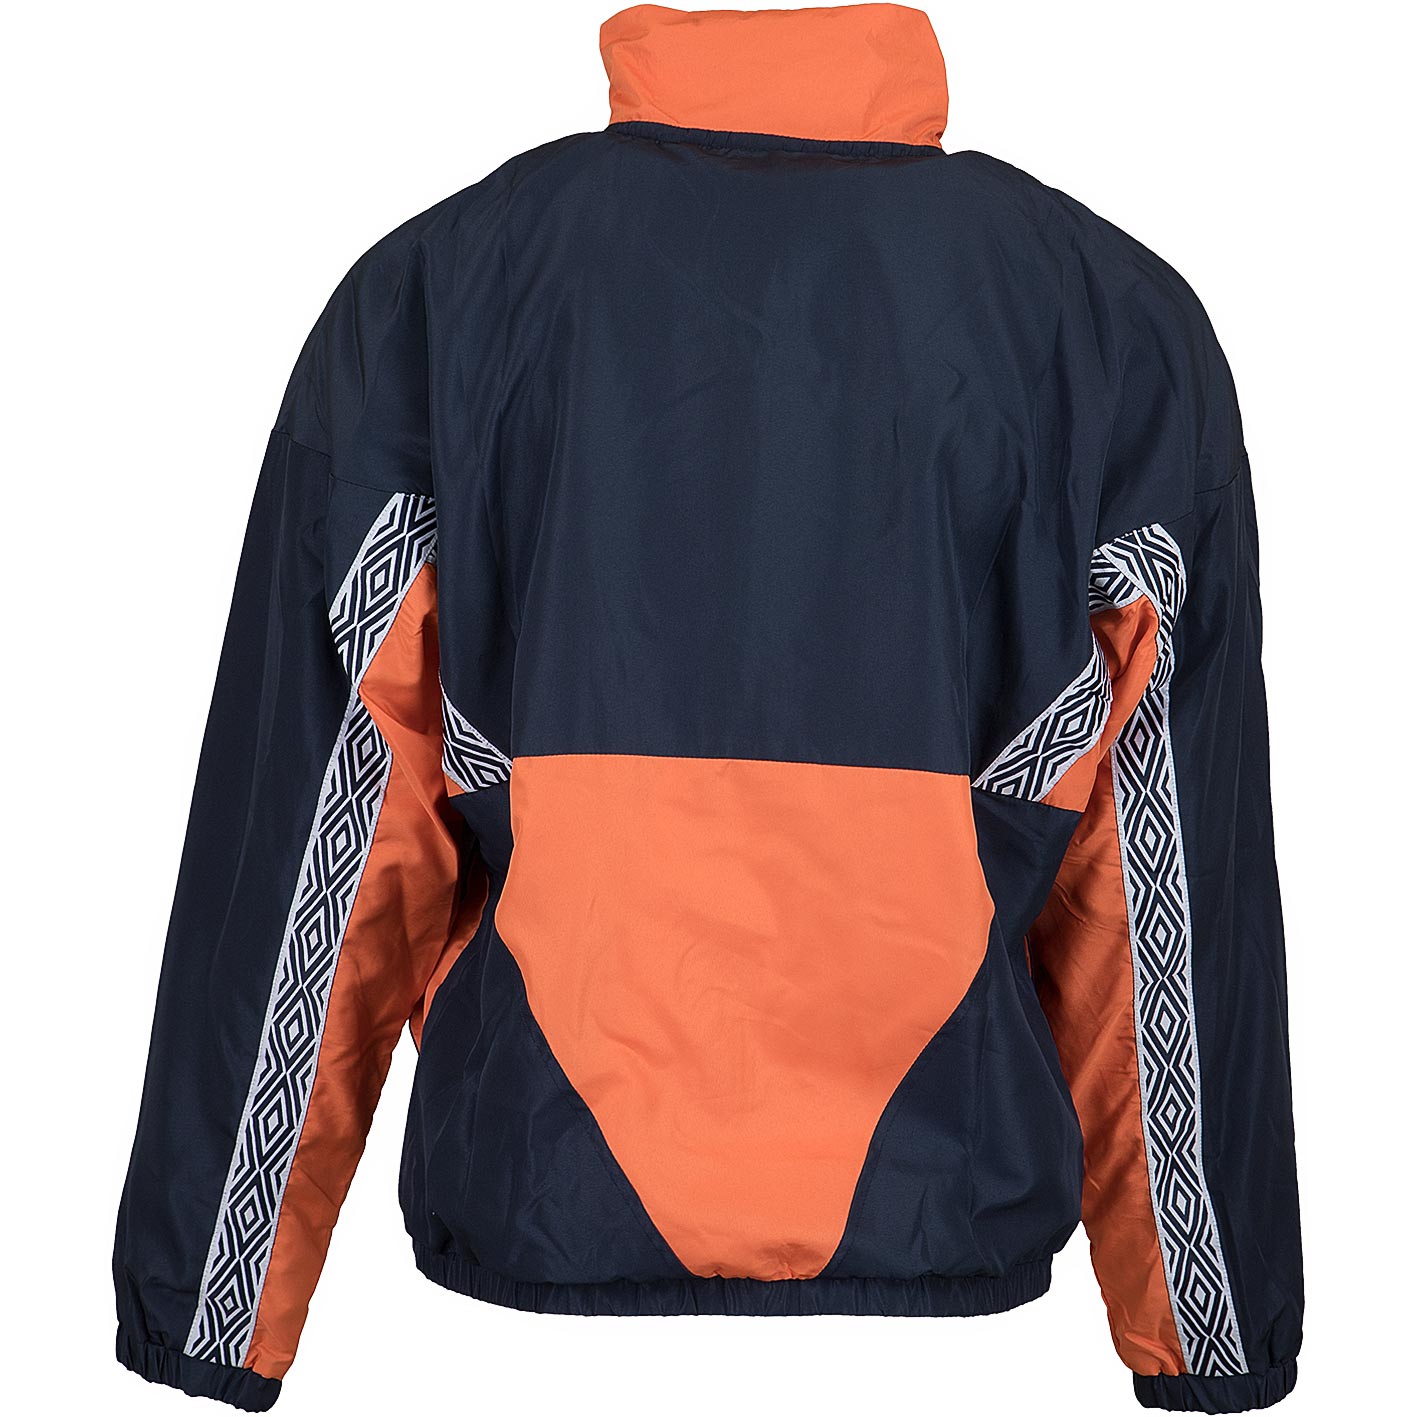 ☆ Umbro Damen Trainingsjacke Shell dunkelblau/orange - hier bestellen!